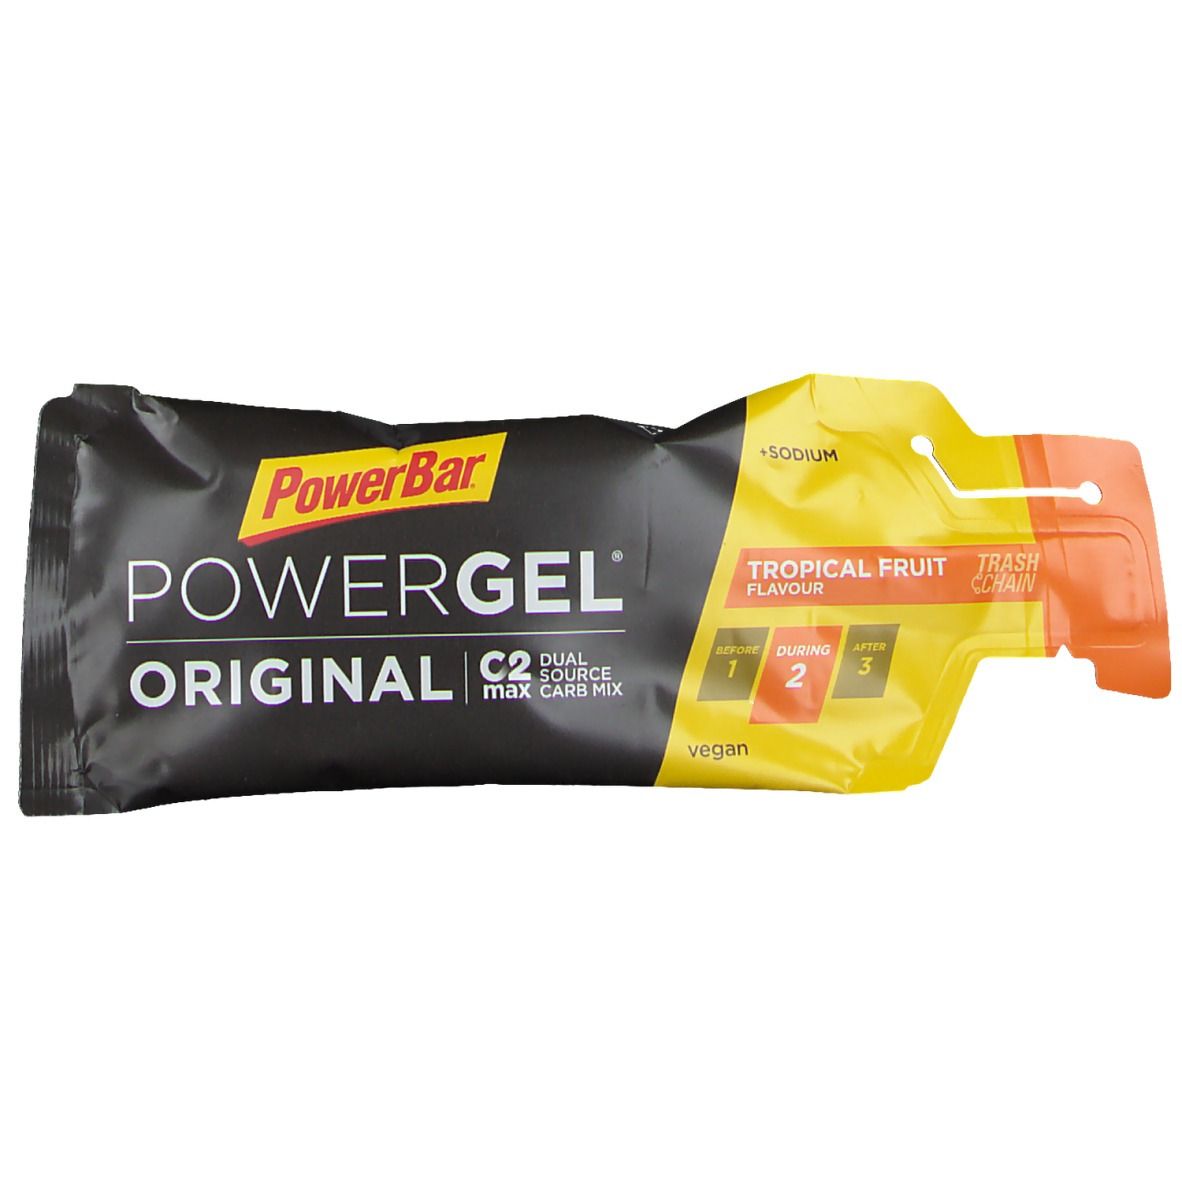 PowerBar® PowerGel® Original Tropical Fruit